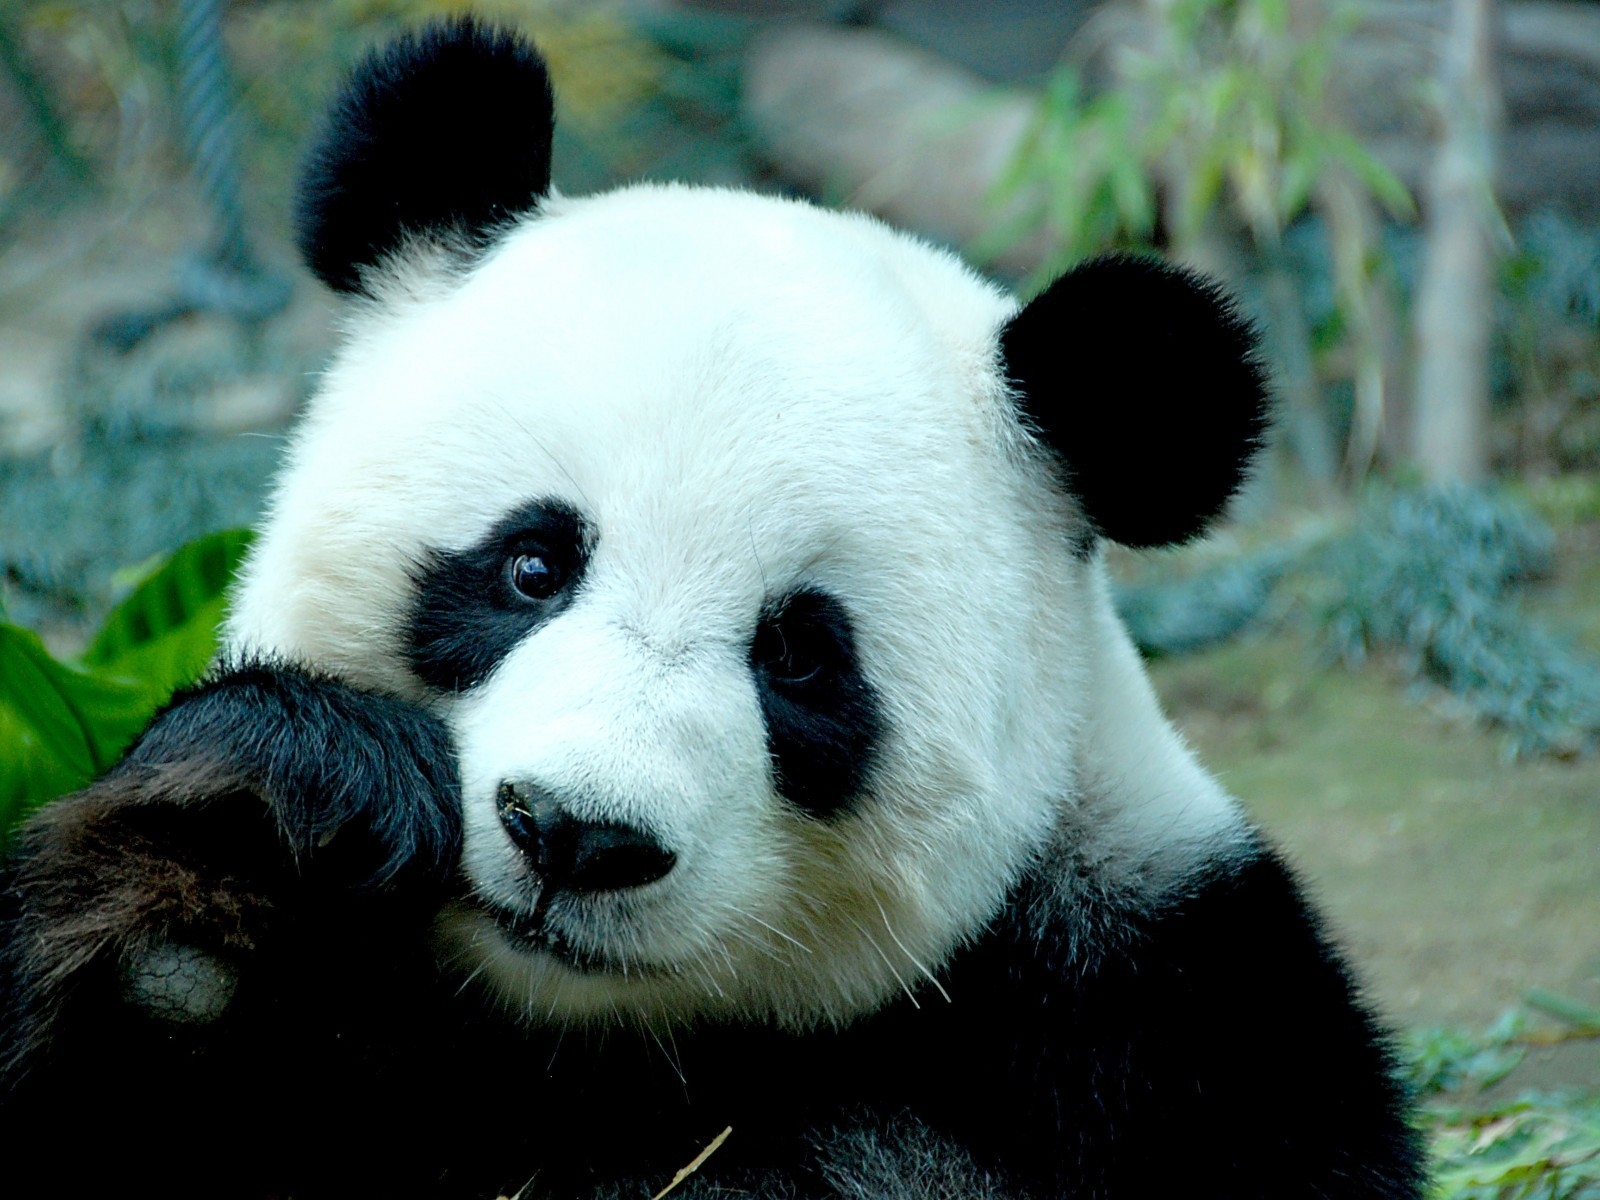 Sad Panda Bear for 1600 x 1200 resolution